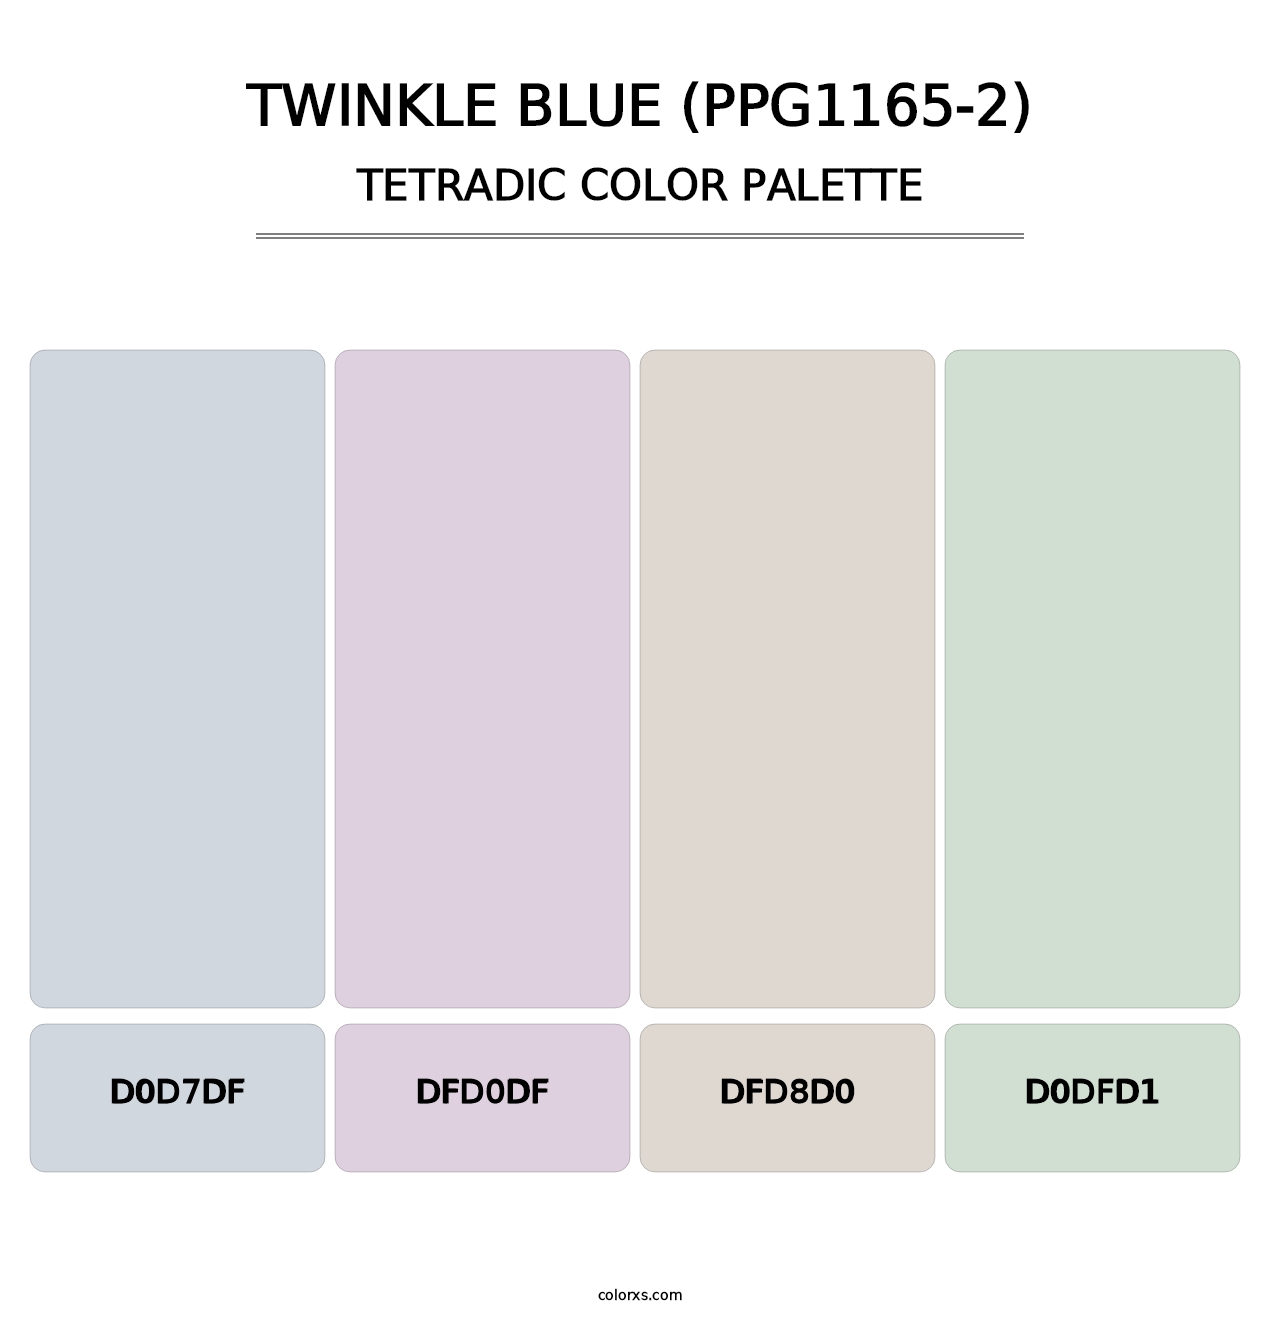 Twinkle Blue (PPG1165-2) - Tetradic Color Palette